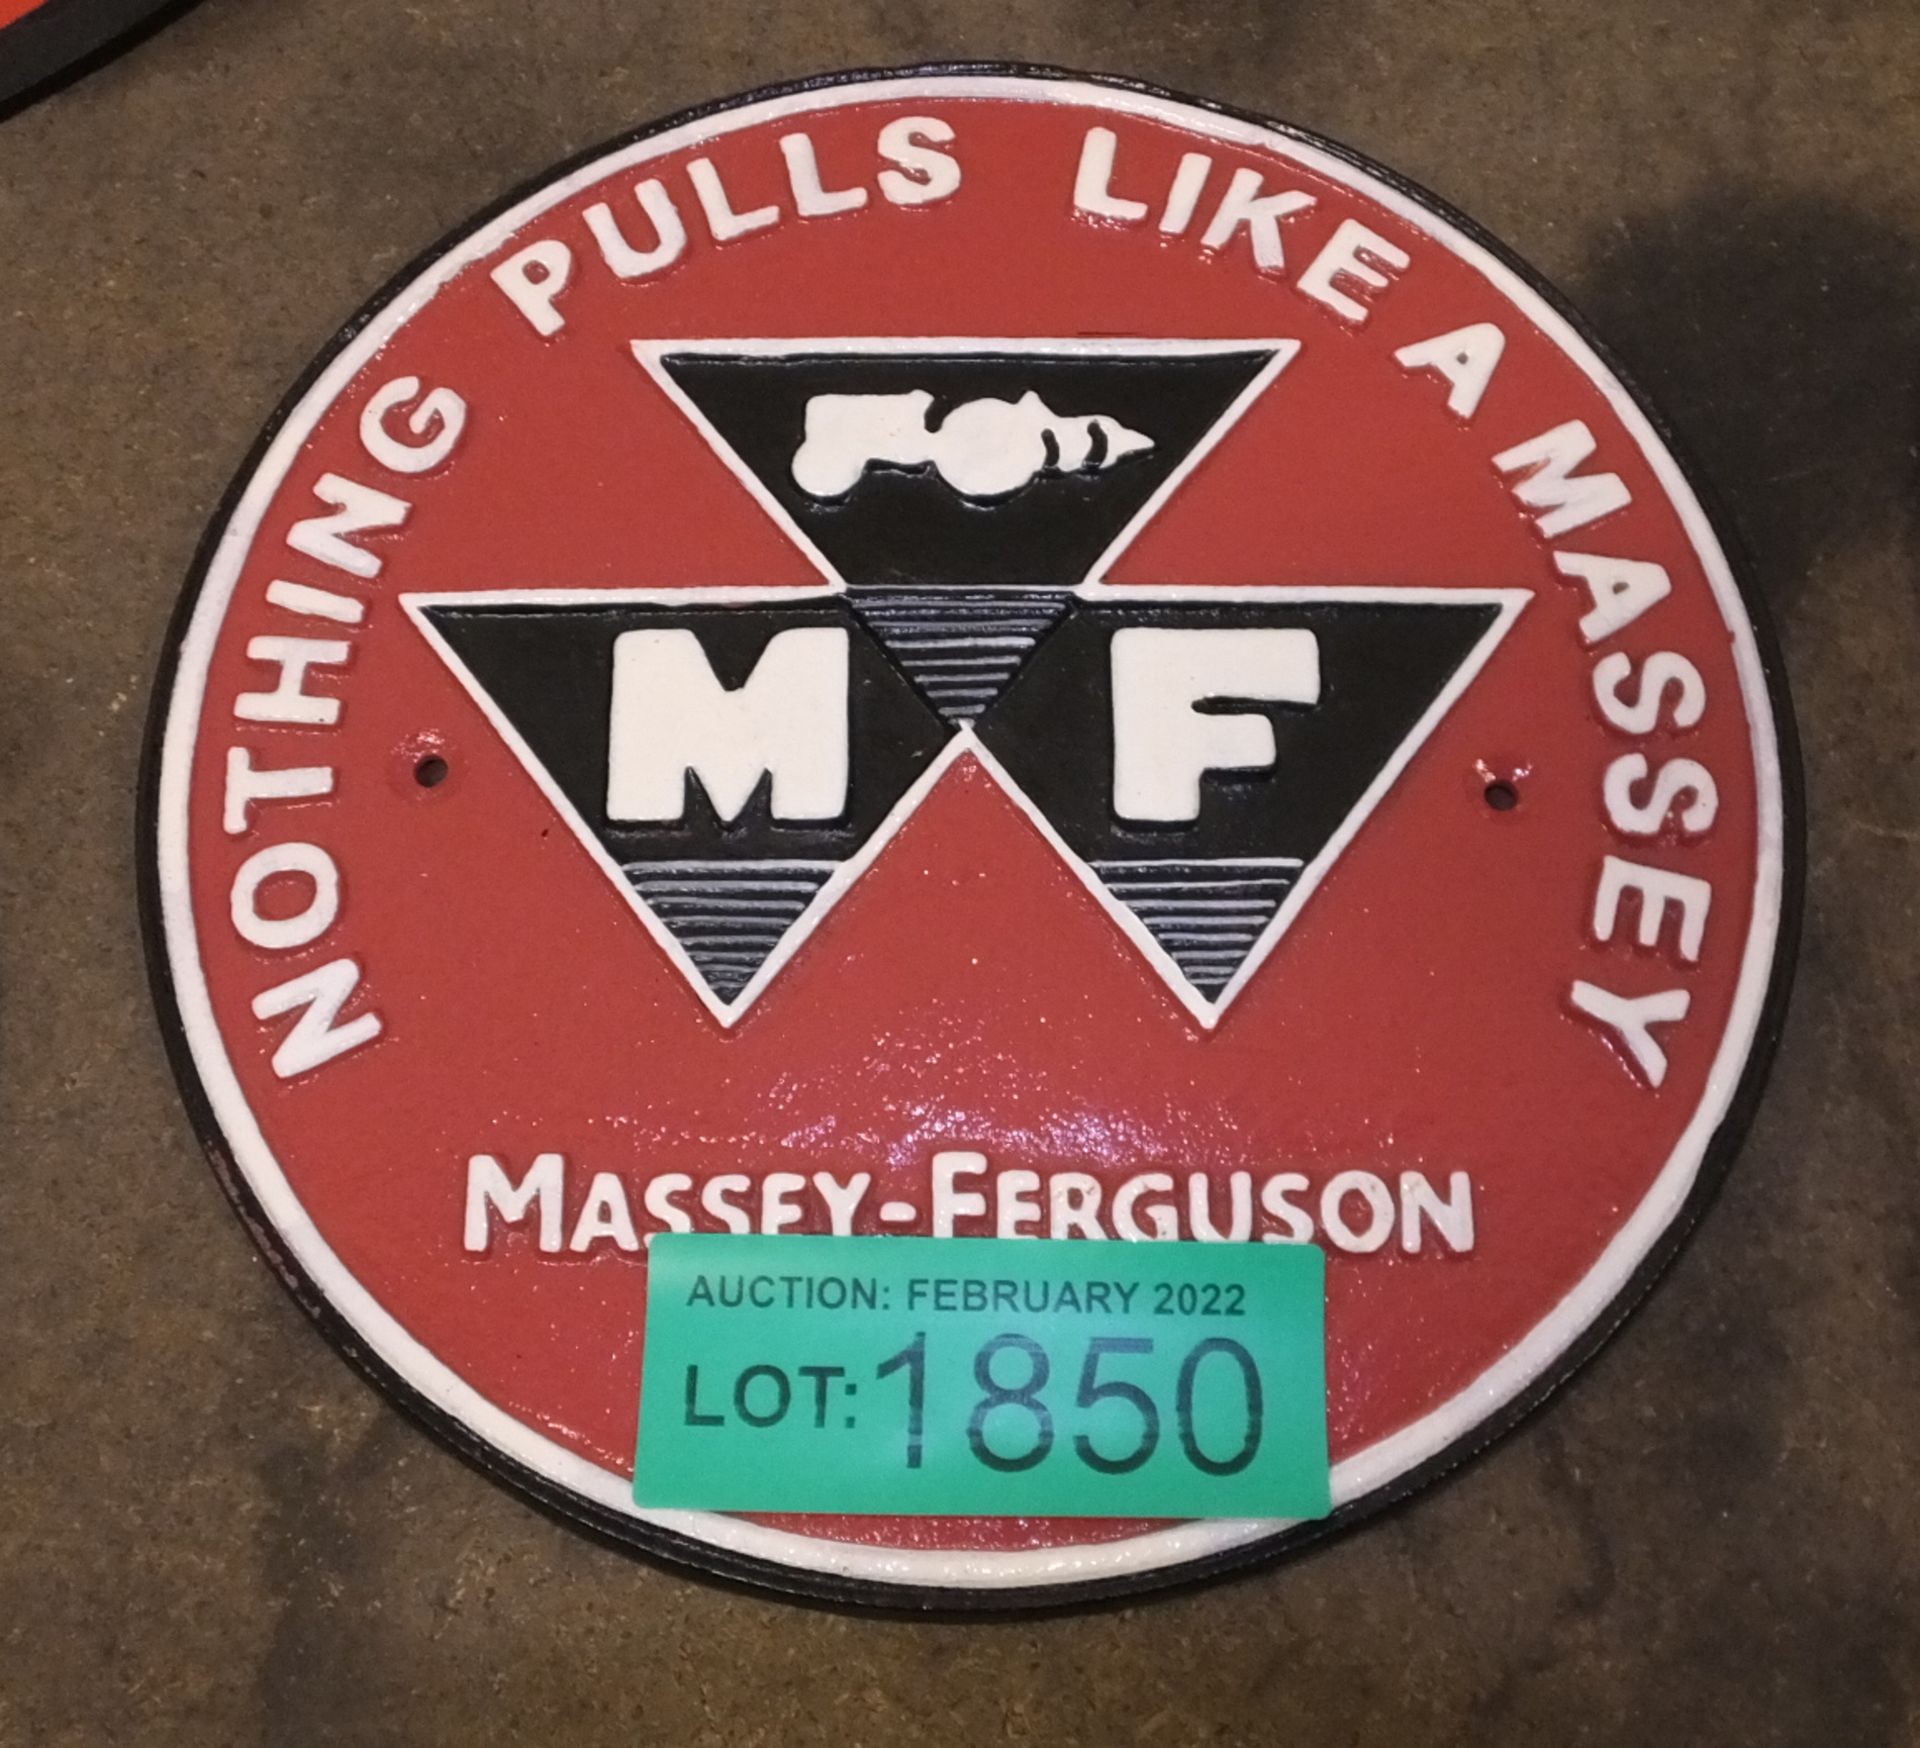 Massey Ferguson cast sign